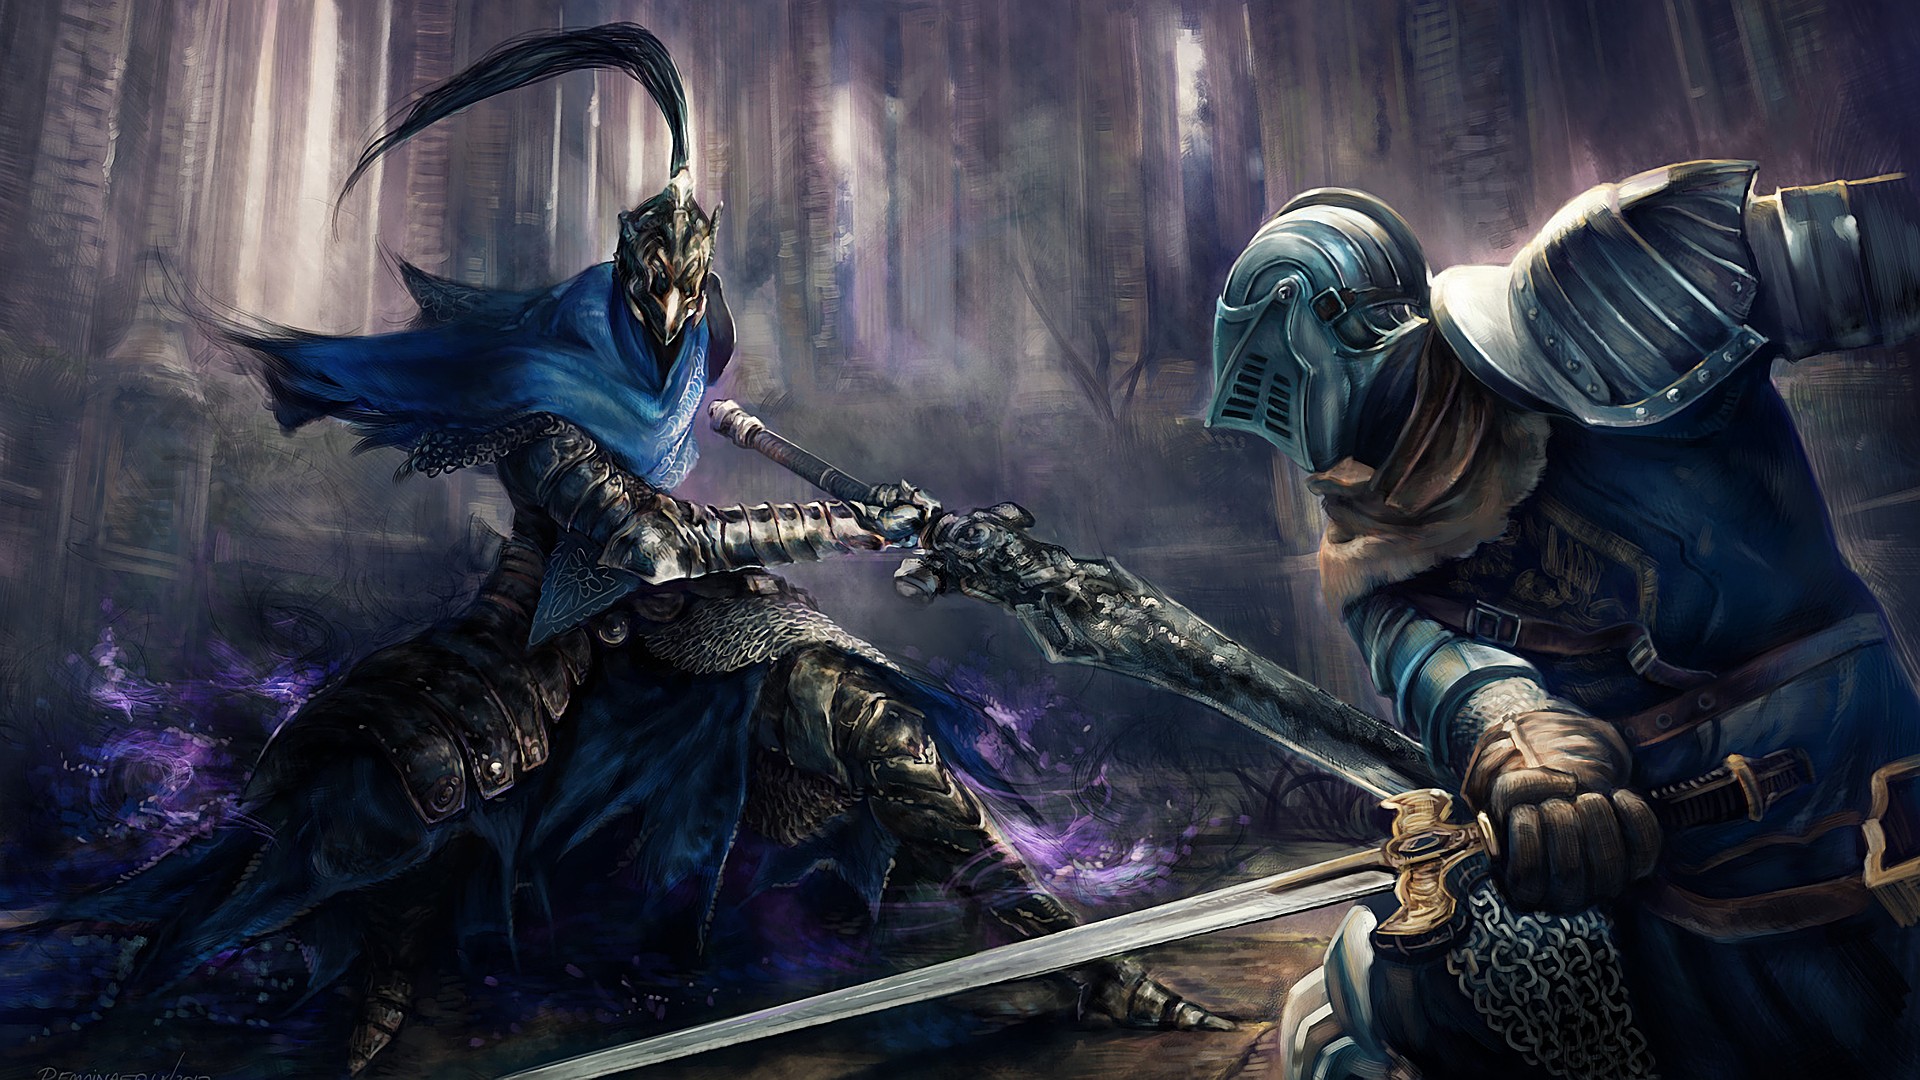 Fantasy Art Dark Souls Wallpapers Hd Desktop And Mobile Backgrounds